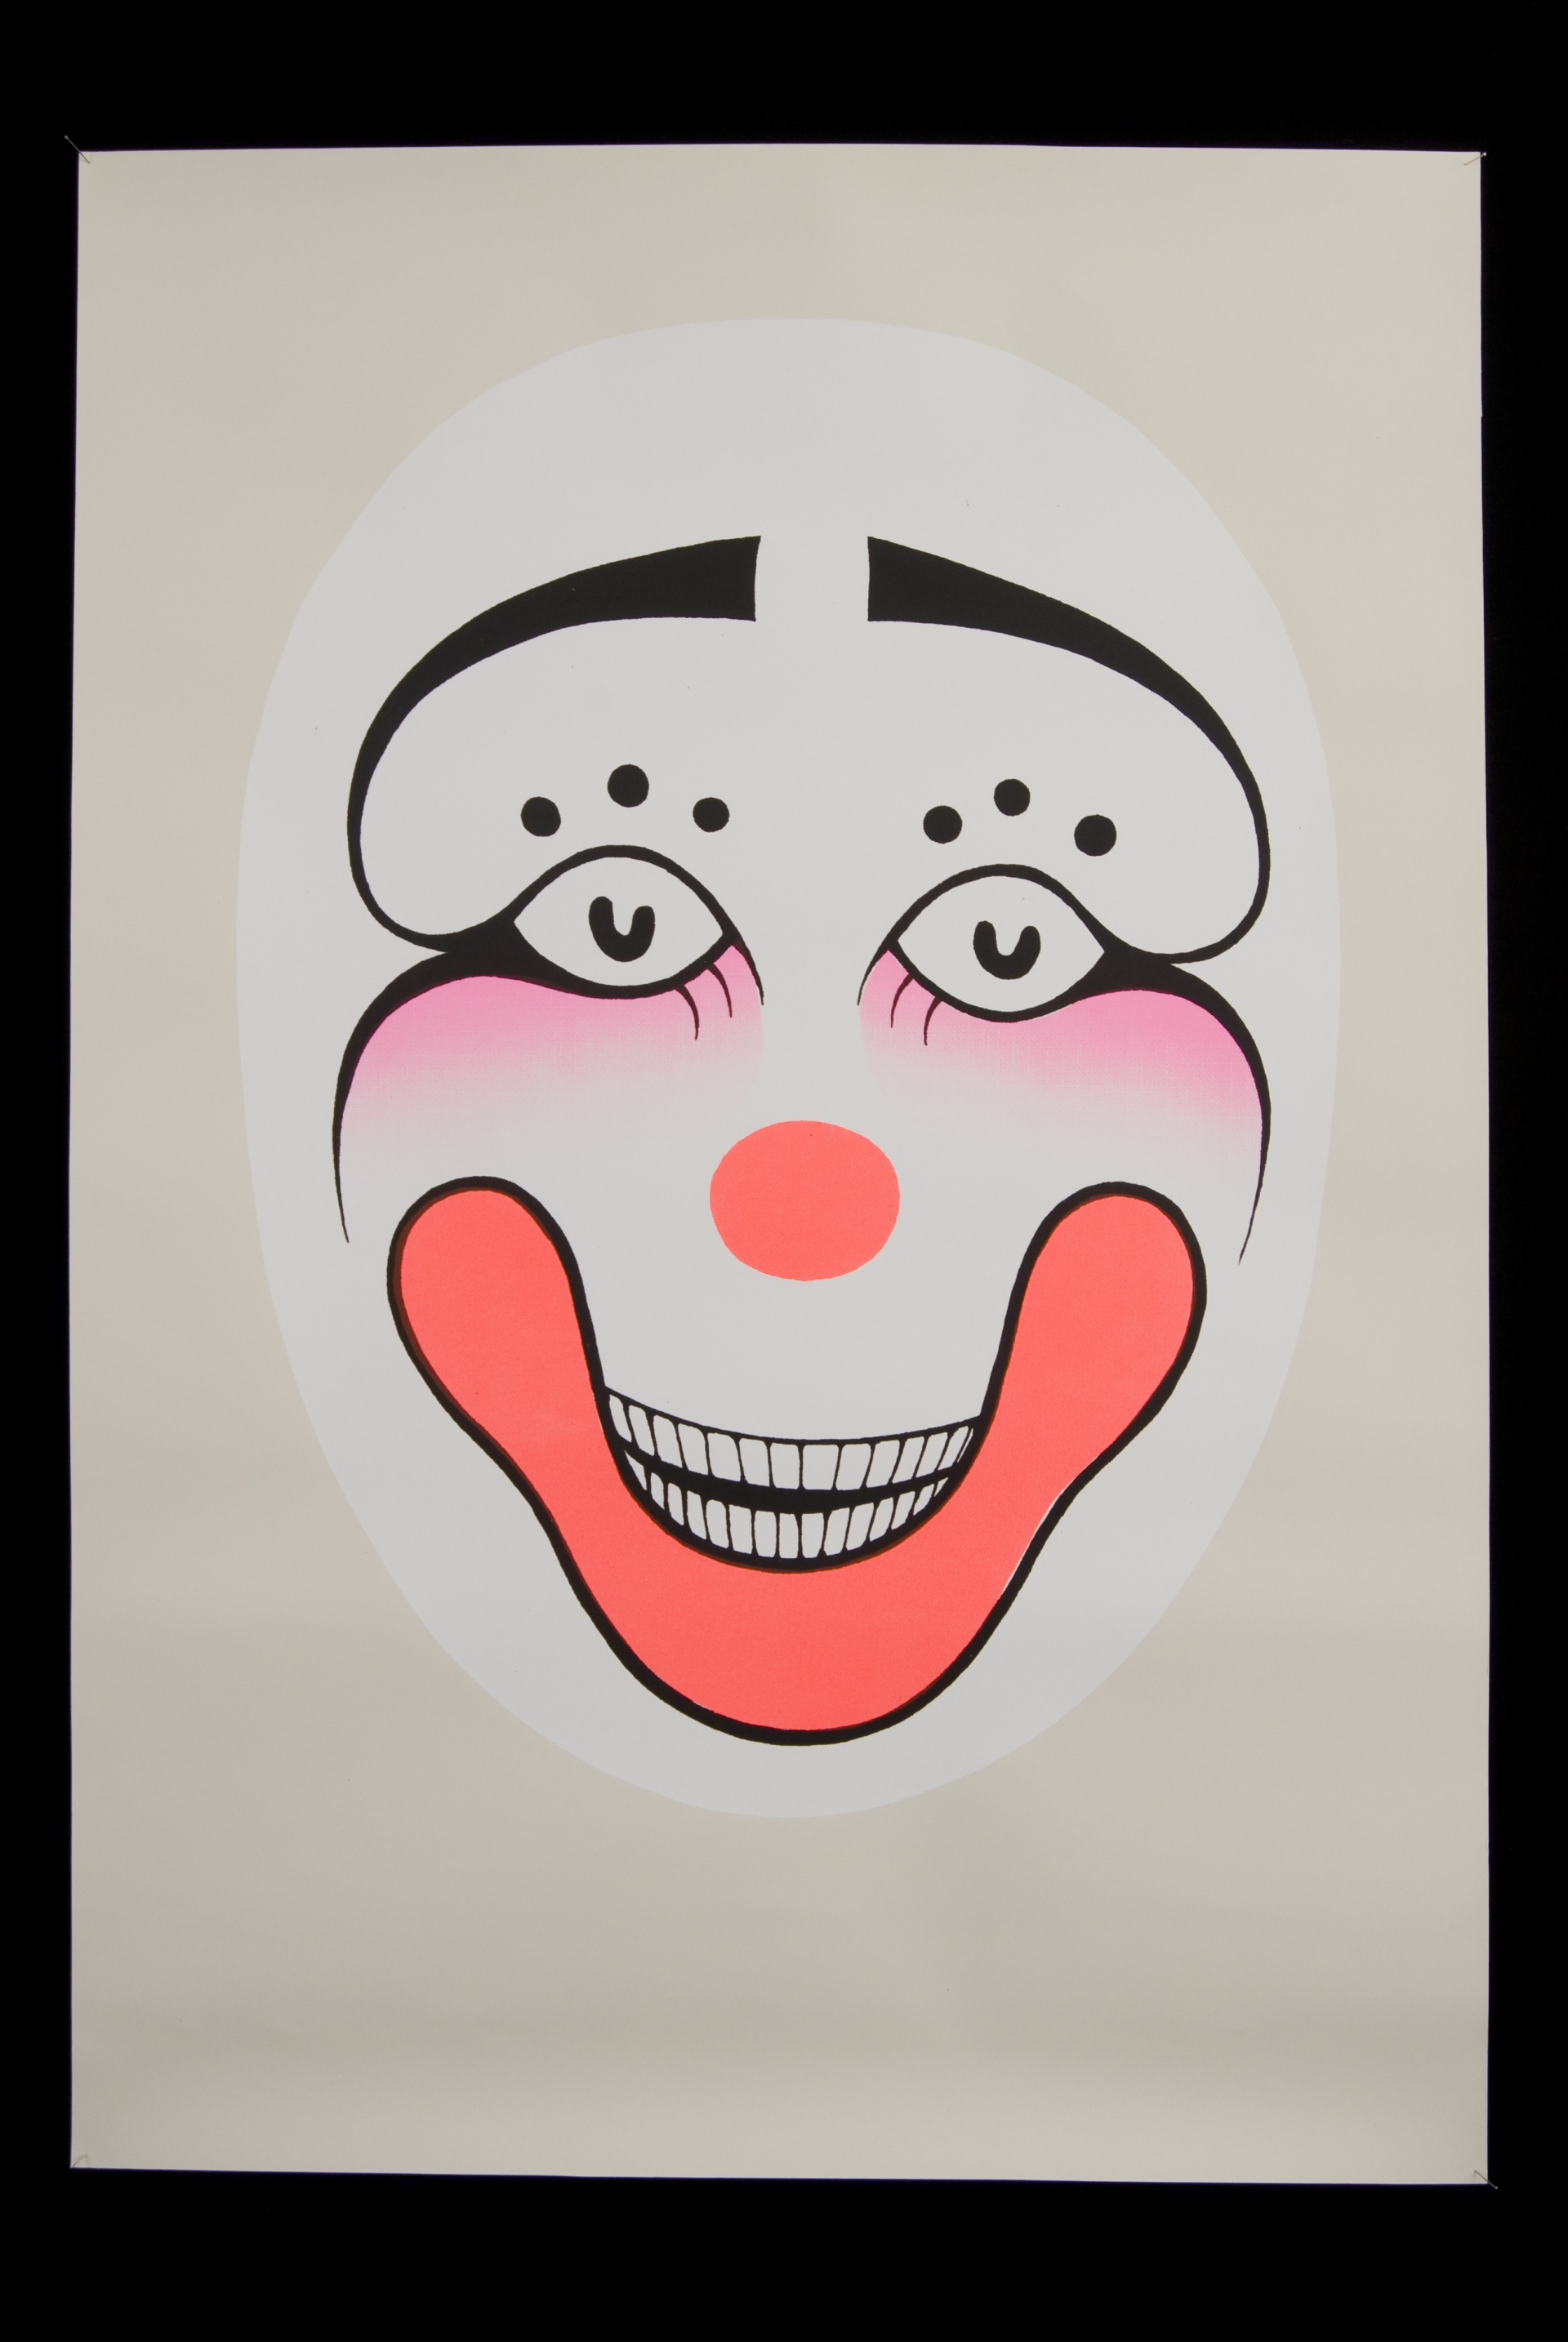 Molly Kyhl clowns